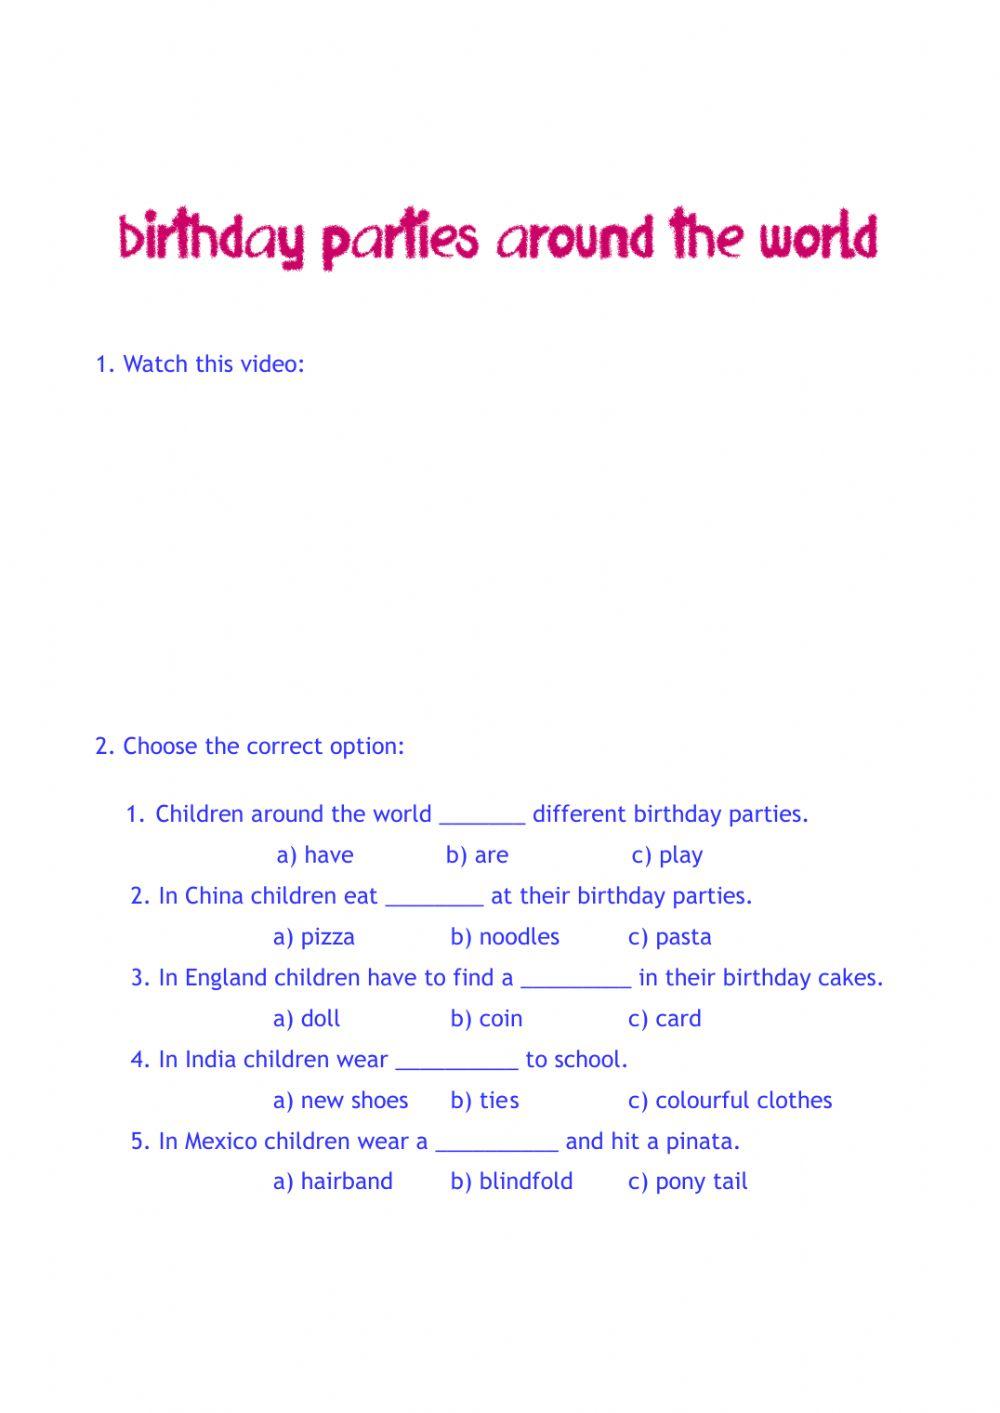 Birthday parties around the world